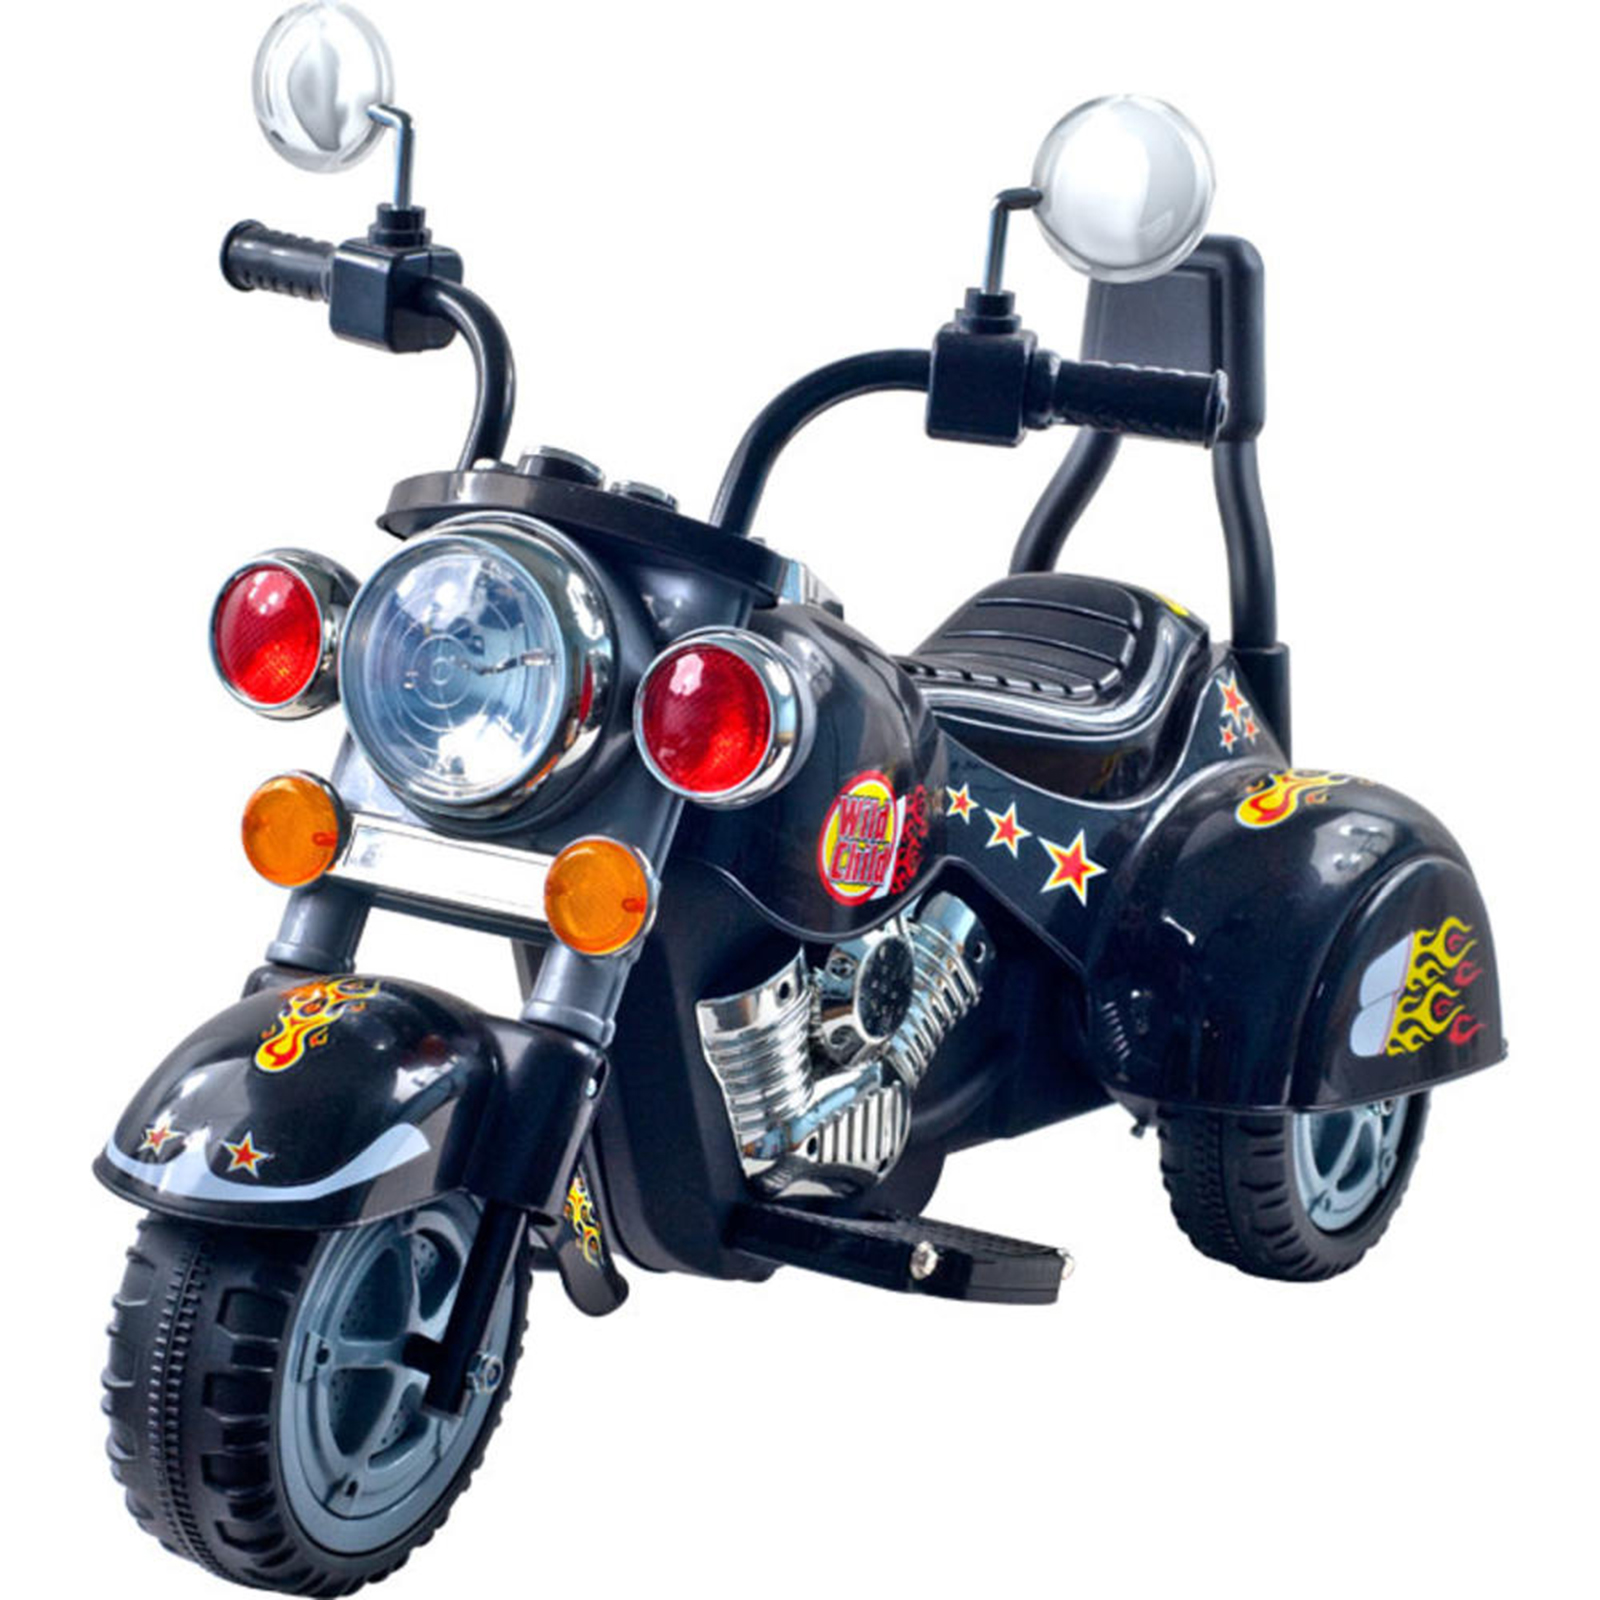 Lil' Rider 6V Battery Harley Style Wild Child Motorcycle - Black